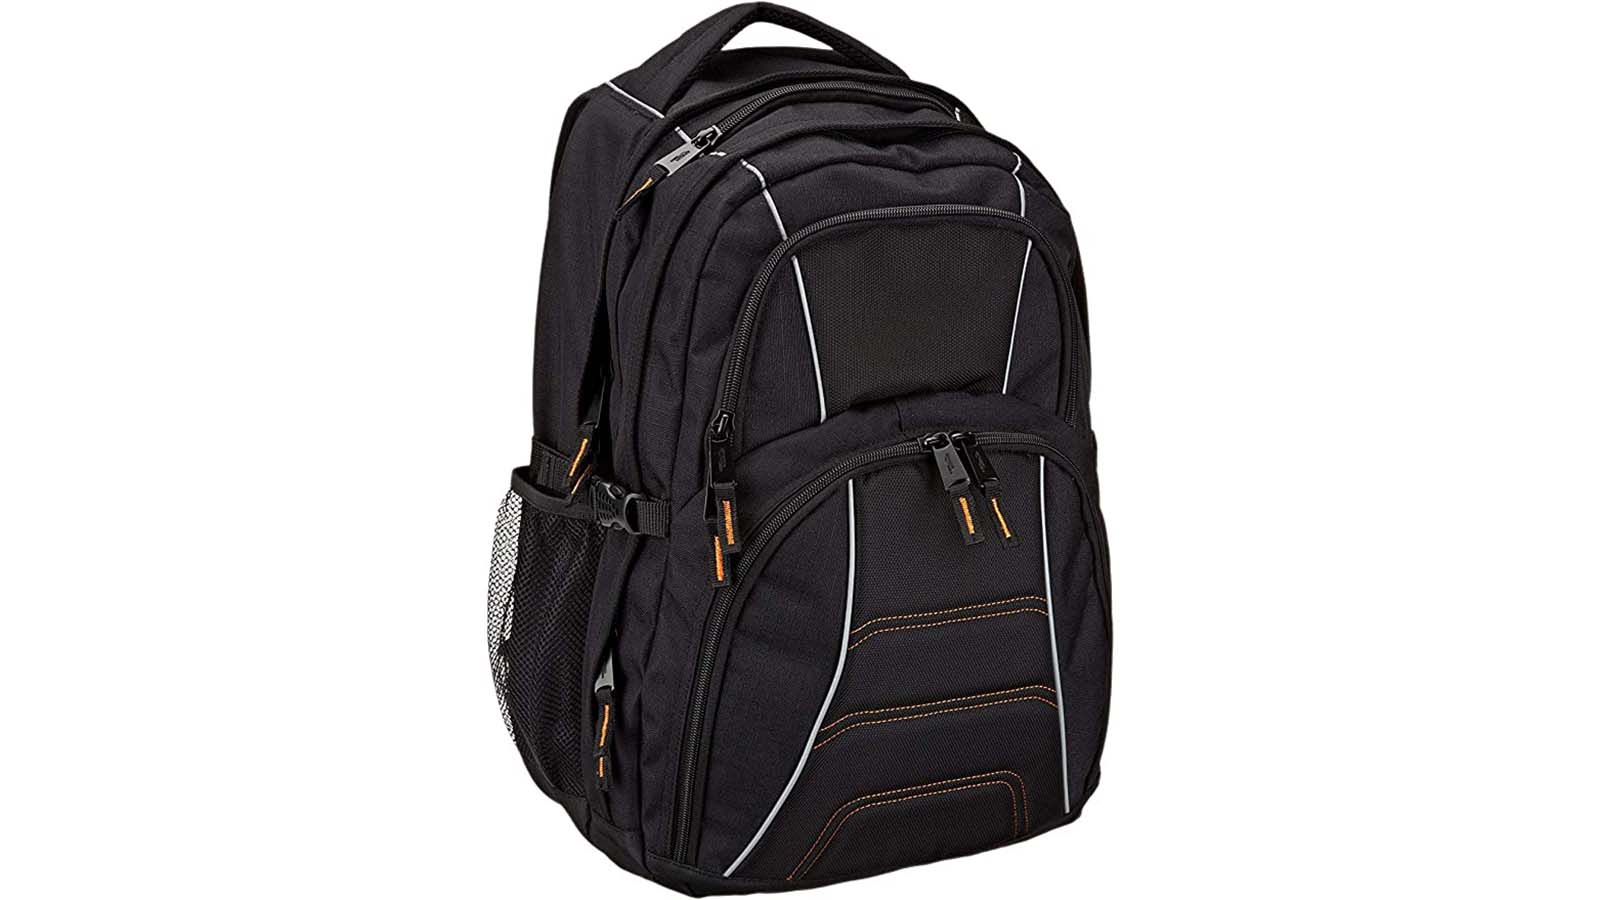 Shop Travel Backpacks - Slim, Lightweight, & Spacious